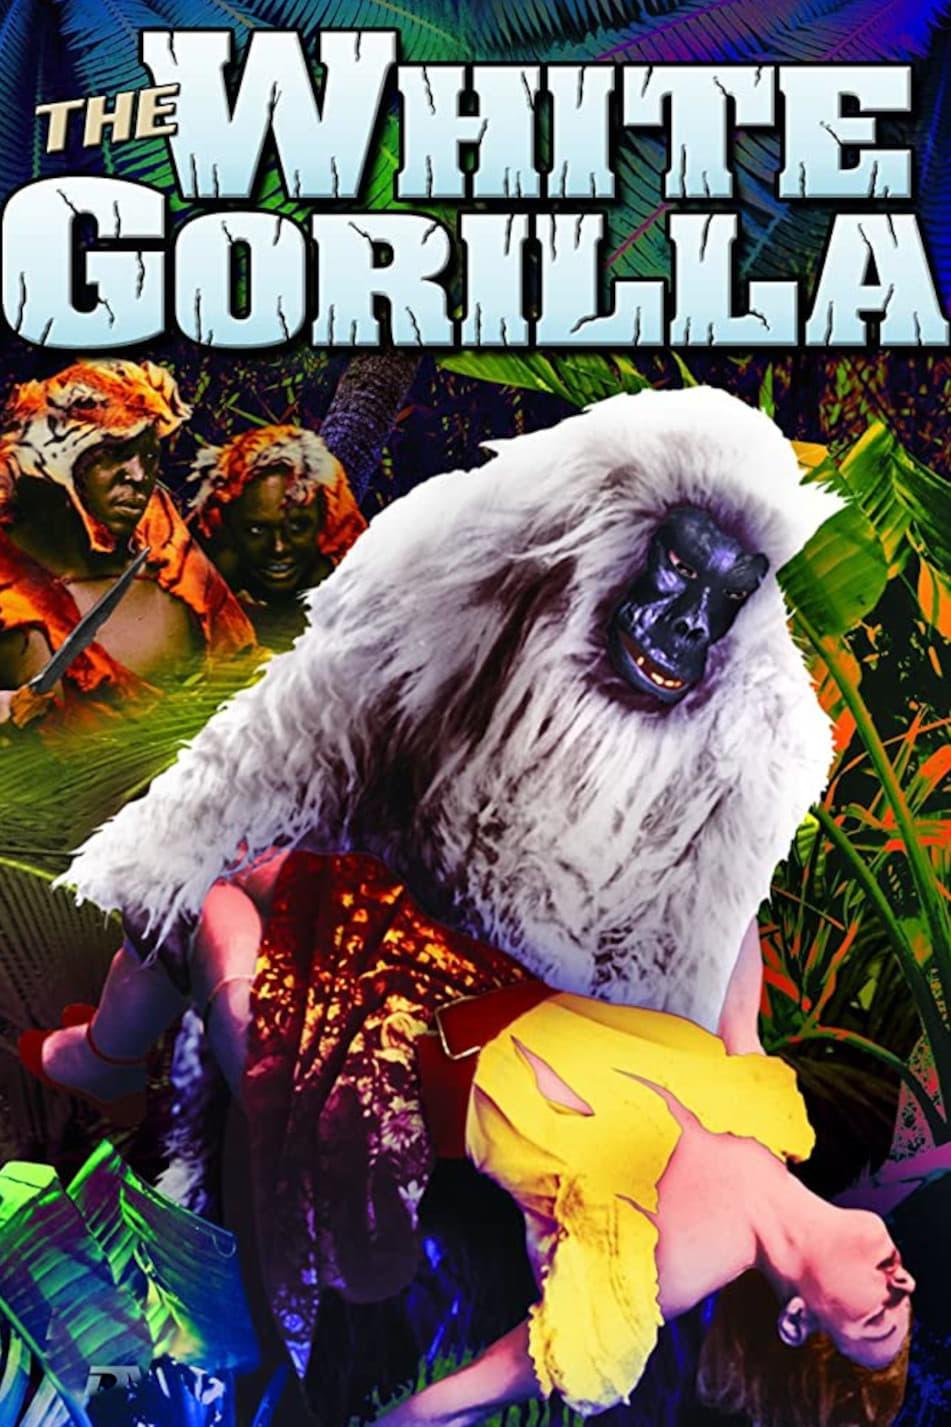 The White Gorilla poster